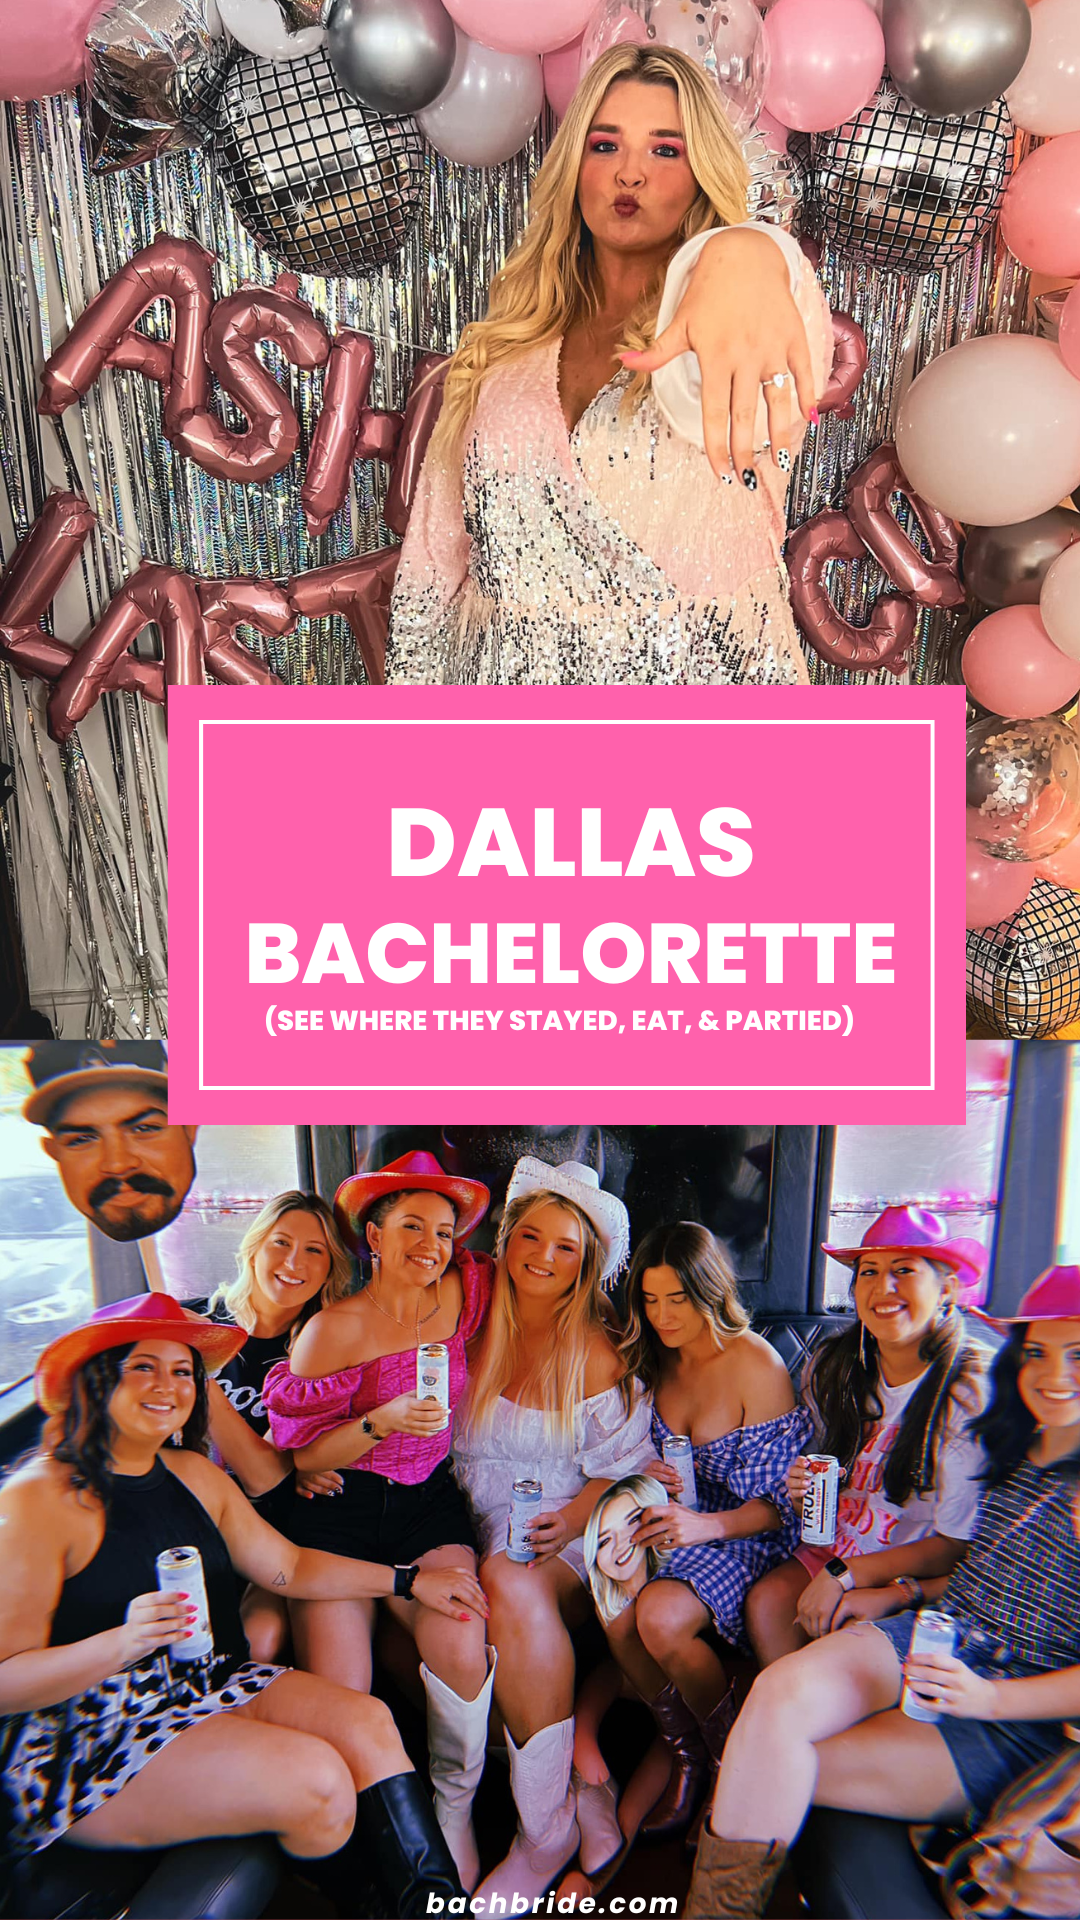 Dallas bachelorette party